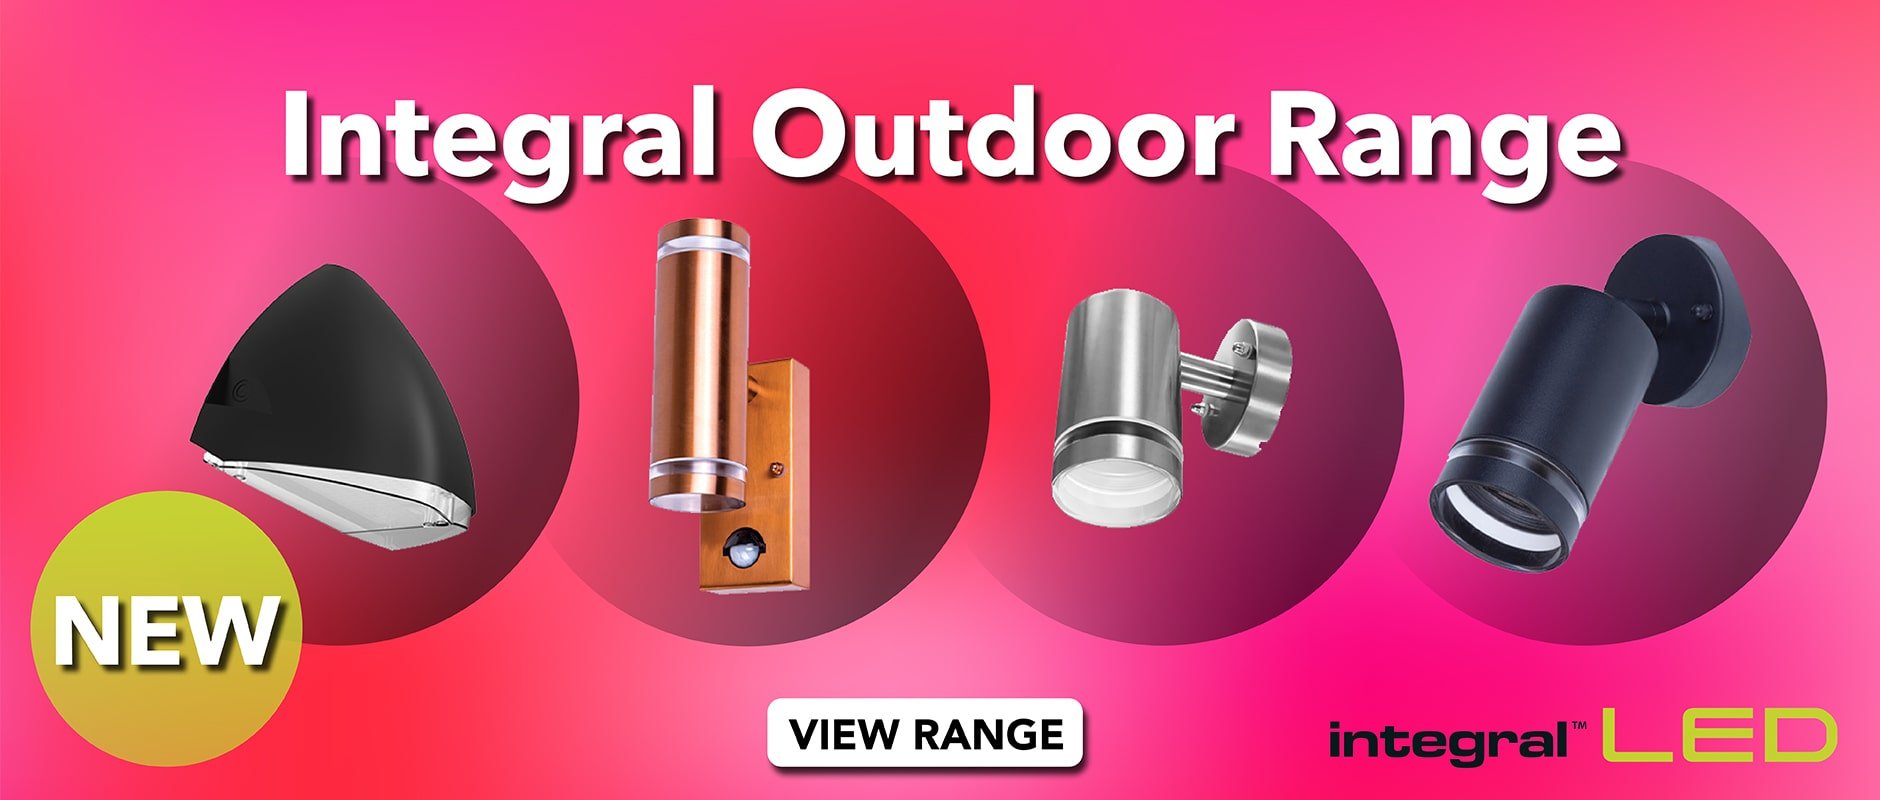 new integral led outdoor range